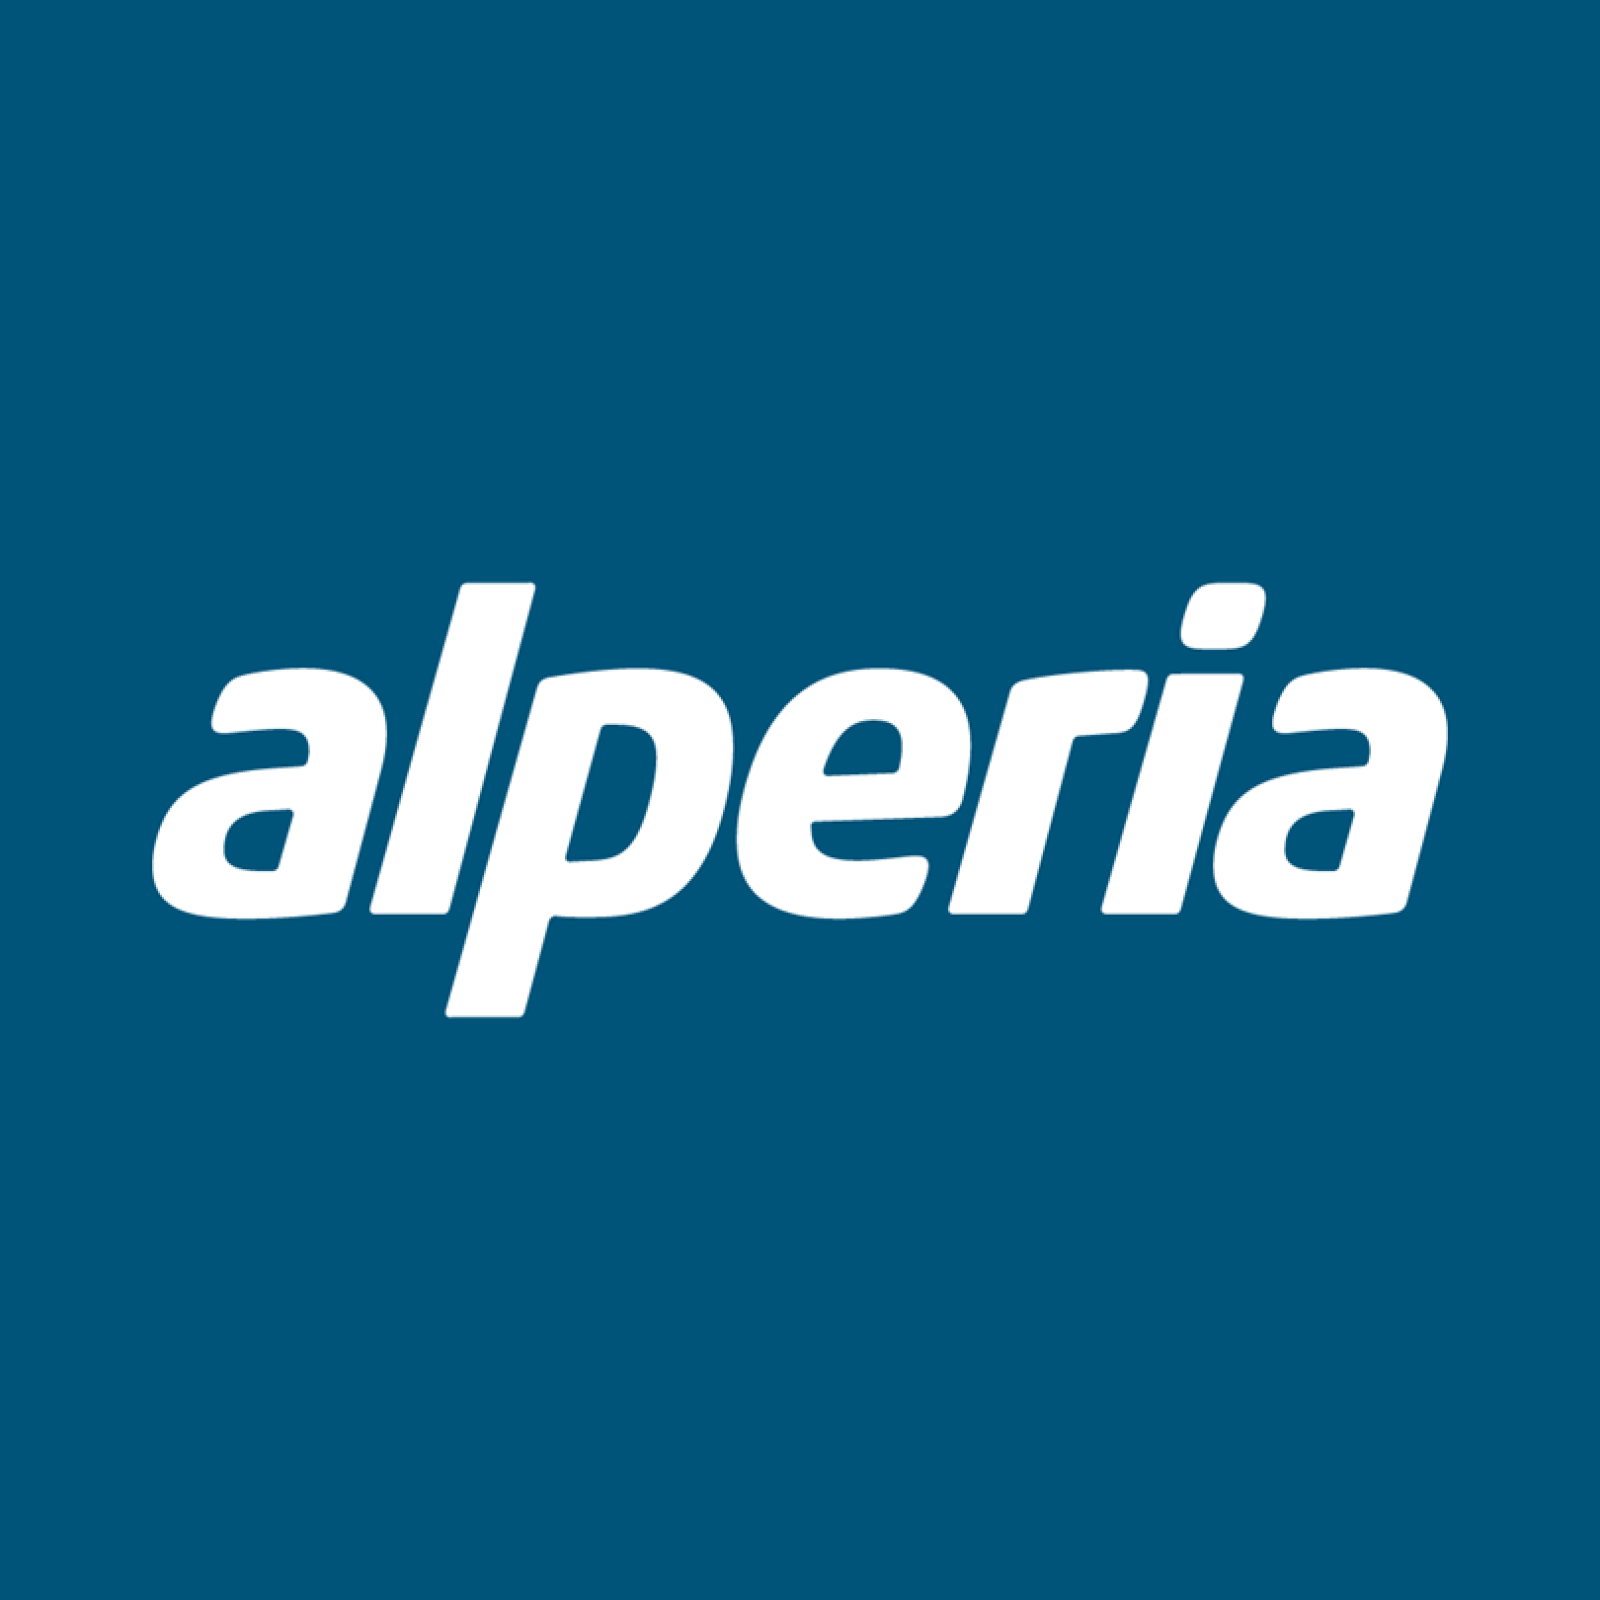 Logo Alperia